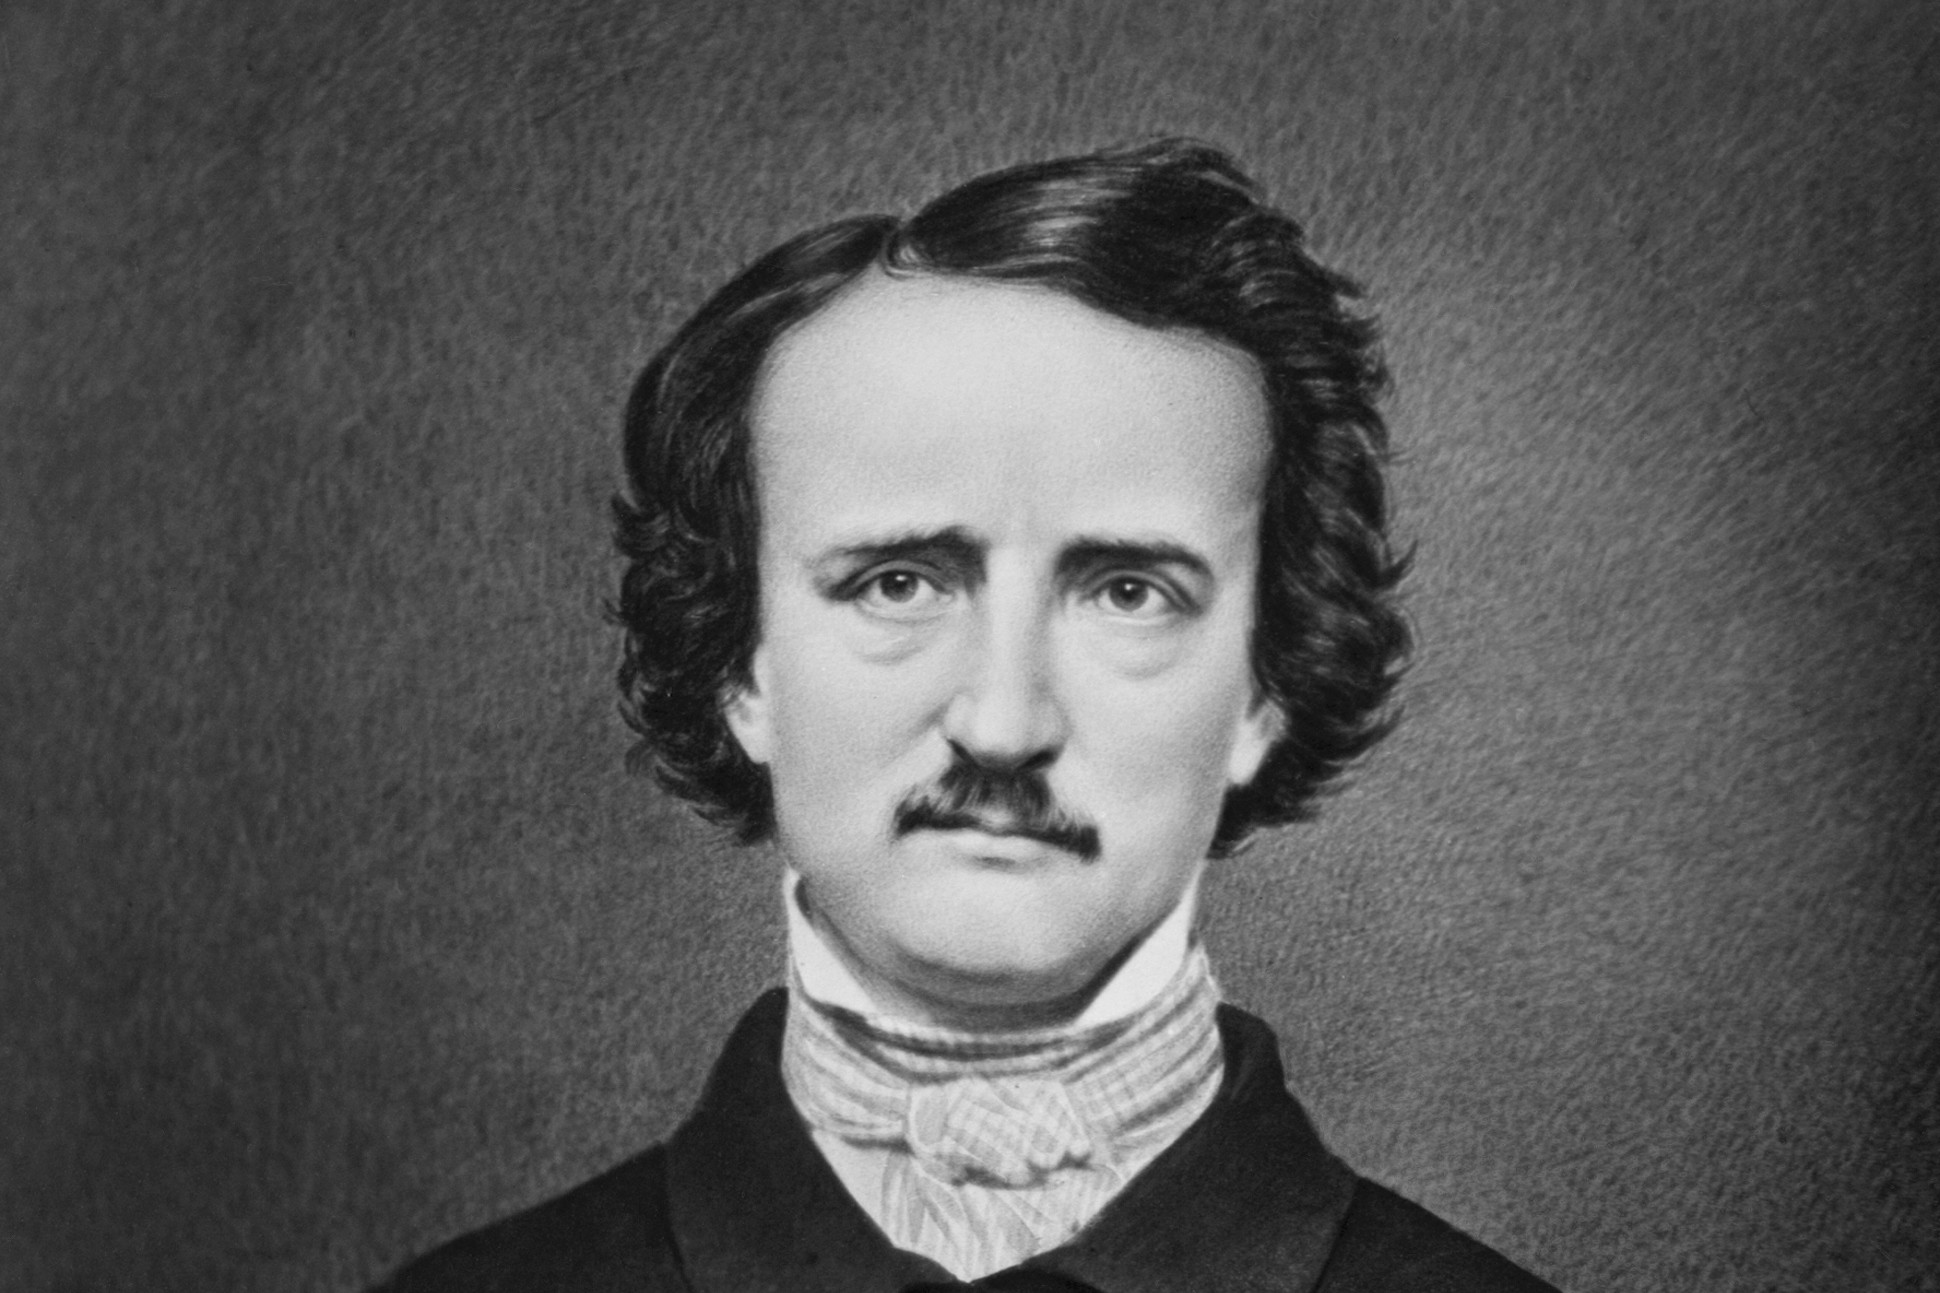 Edgar Allan Poe's image